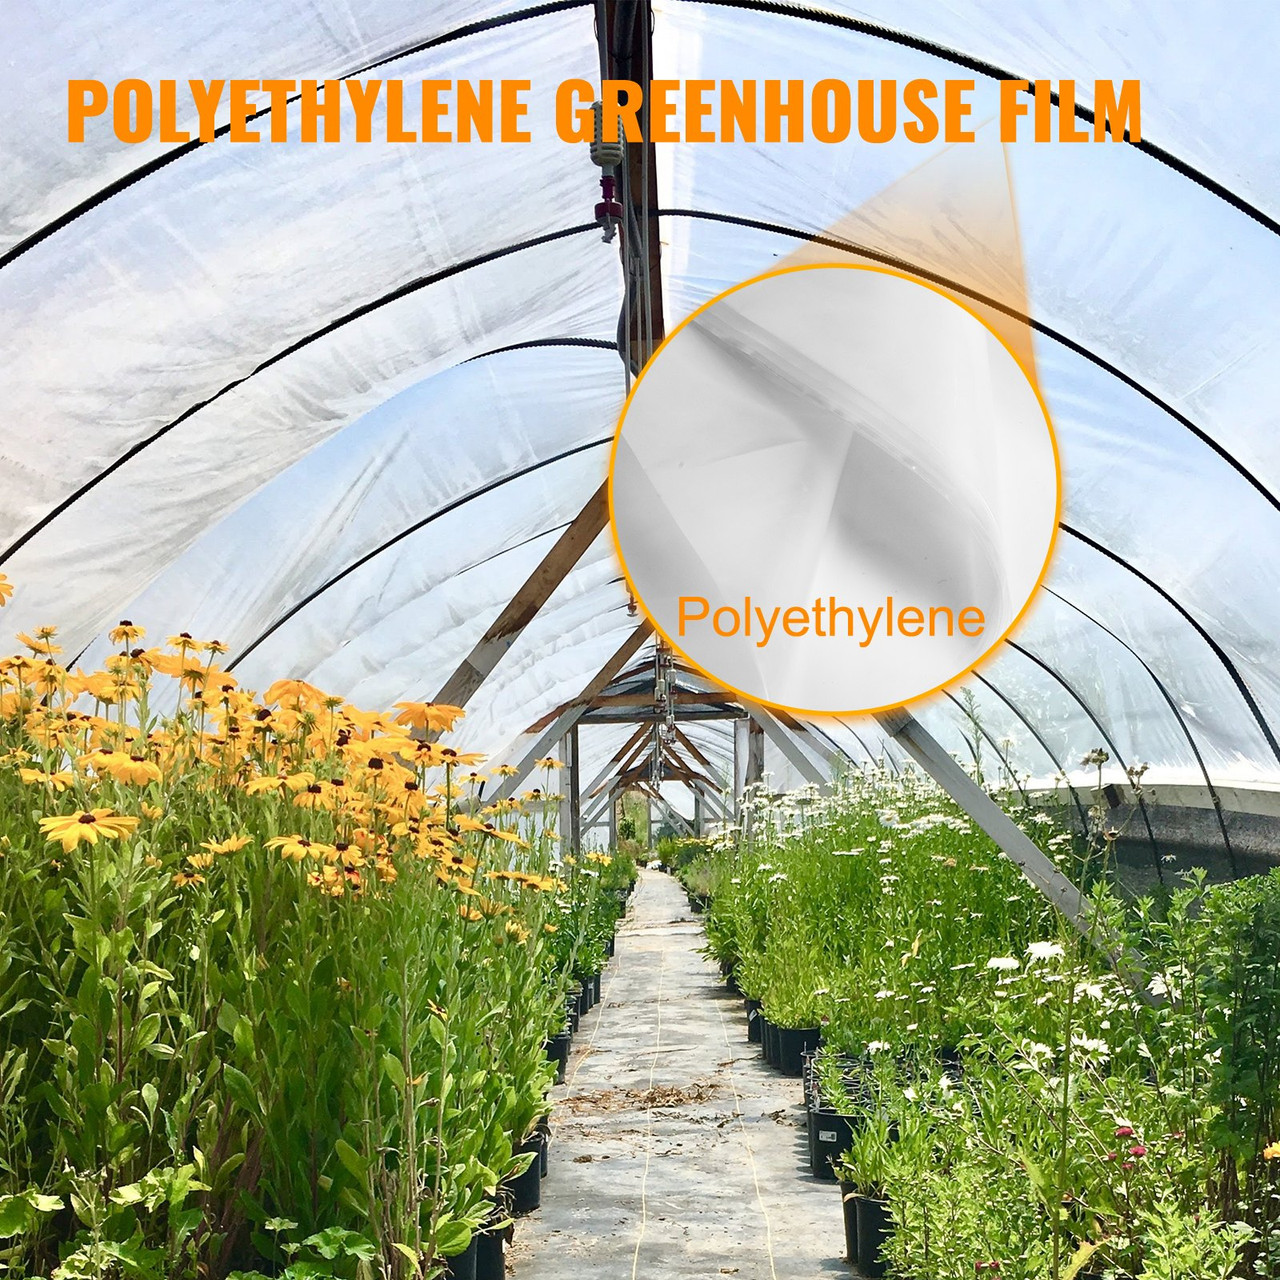 Greenhouse Film 15 x 40 ft, Greenhouse Polyethylene Film 6 Mil Thickness, Greenhouse Plastic Greenhouse Clear Plastic Film UV Resistant, Polyethylene